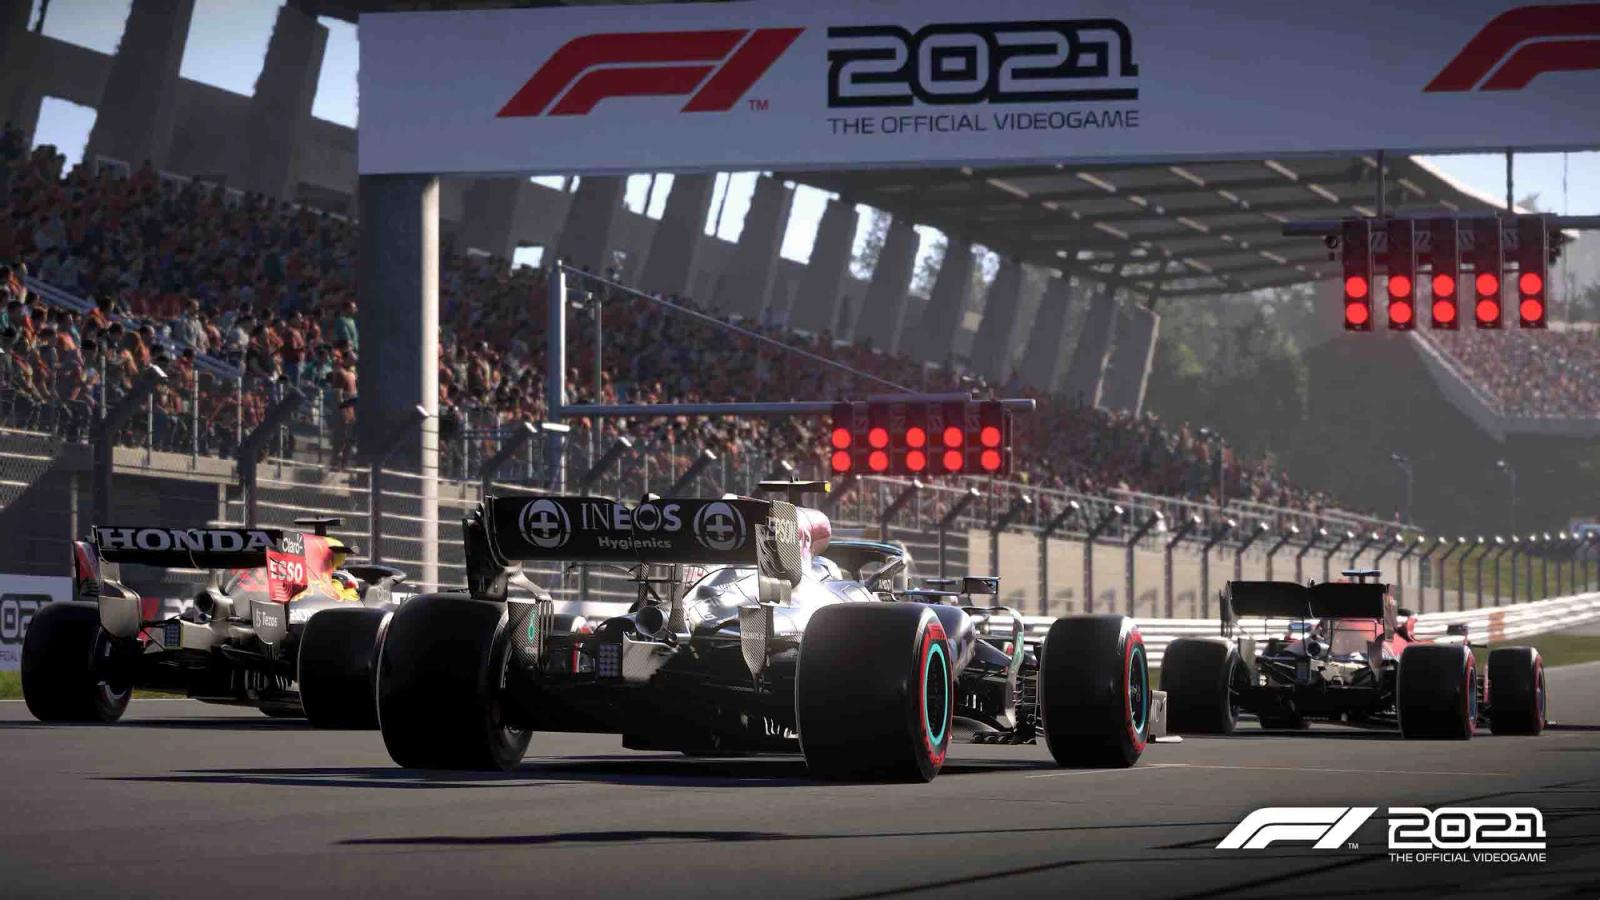 F1 2021 start